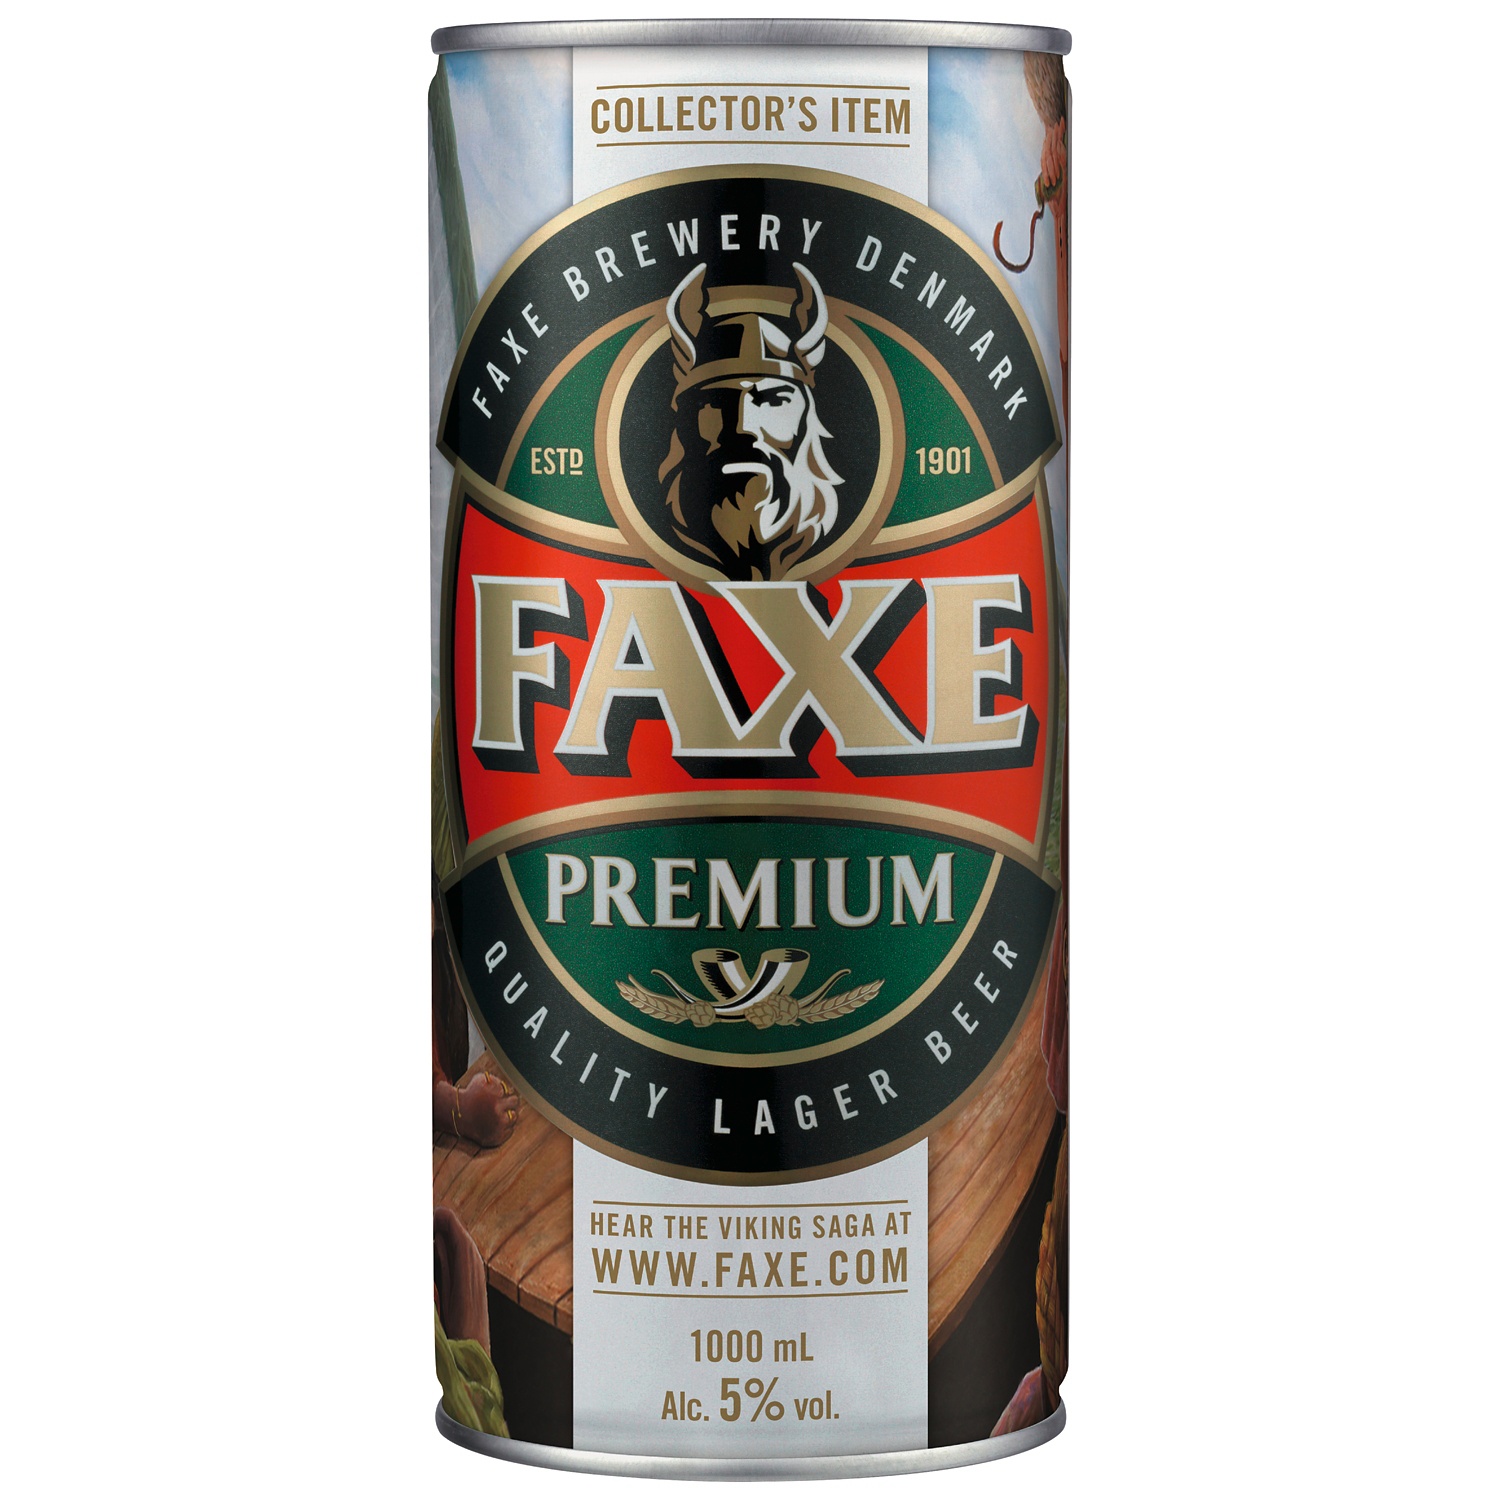 Faxe Premium
Bier